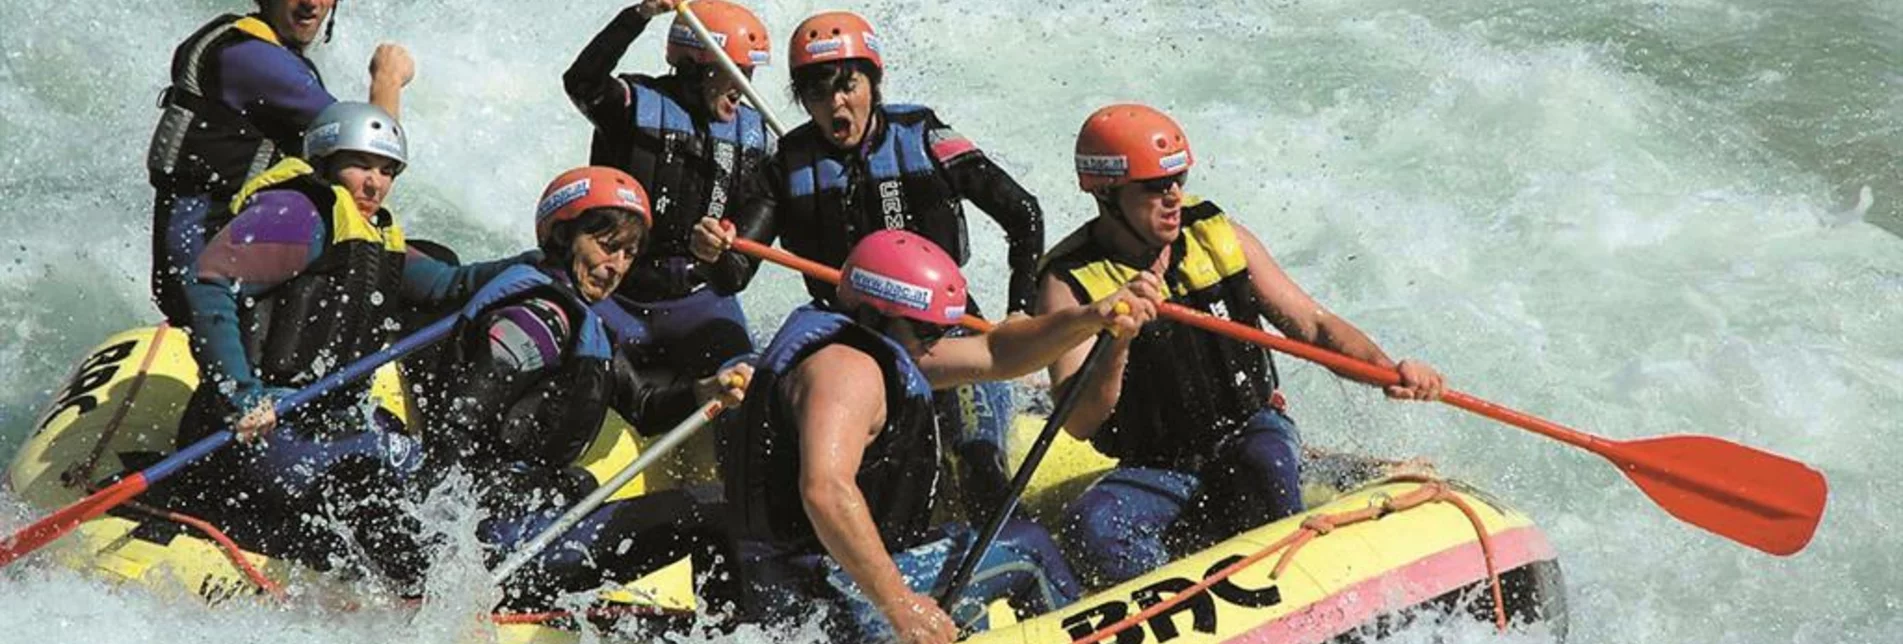 Canoeing BAC - Best Adventure Company - Touren-Impression #1 | © BAC